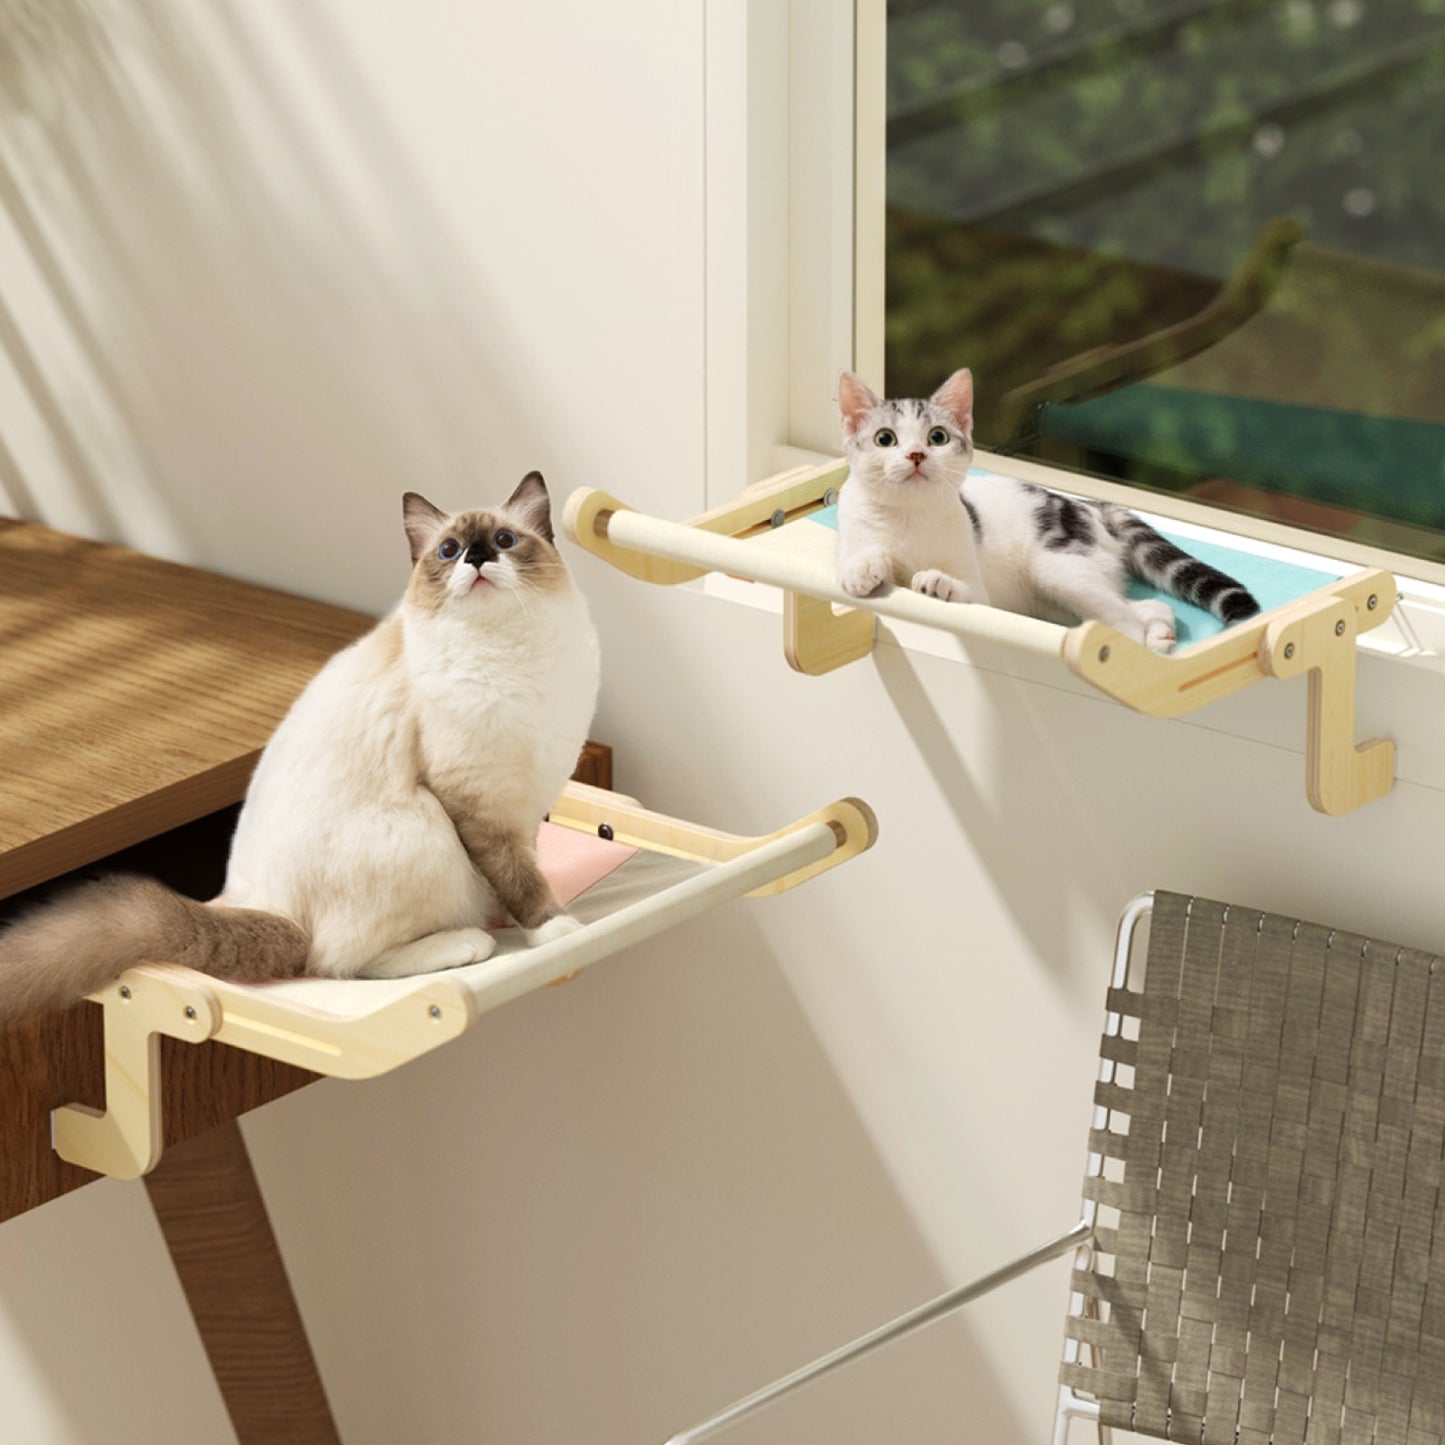 Mewoofun Sturdy Cat Window Perch